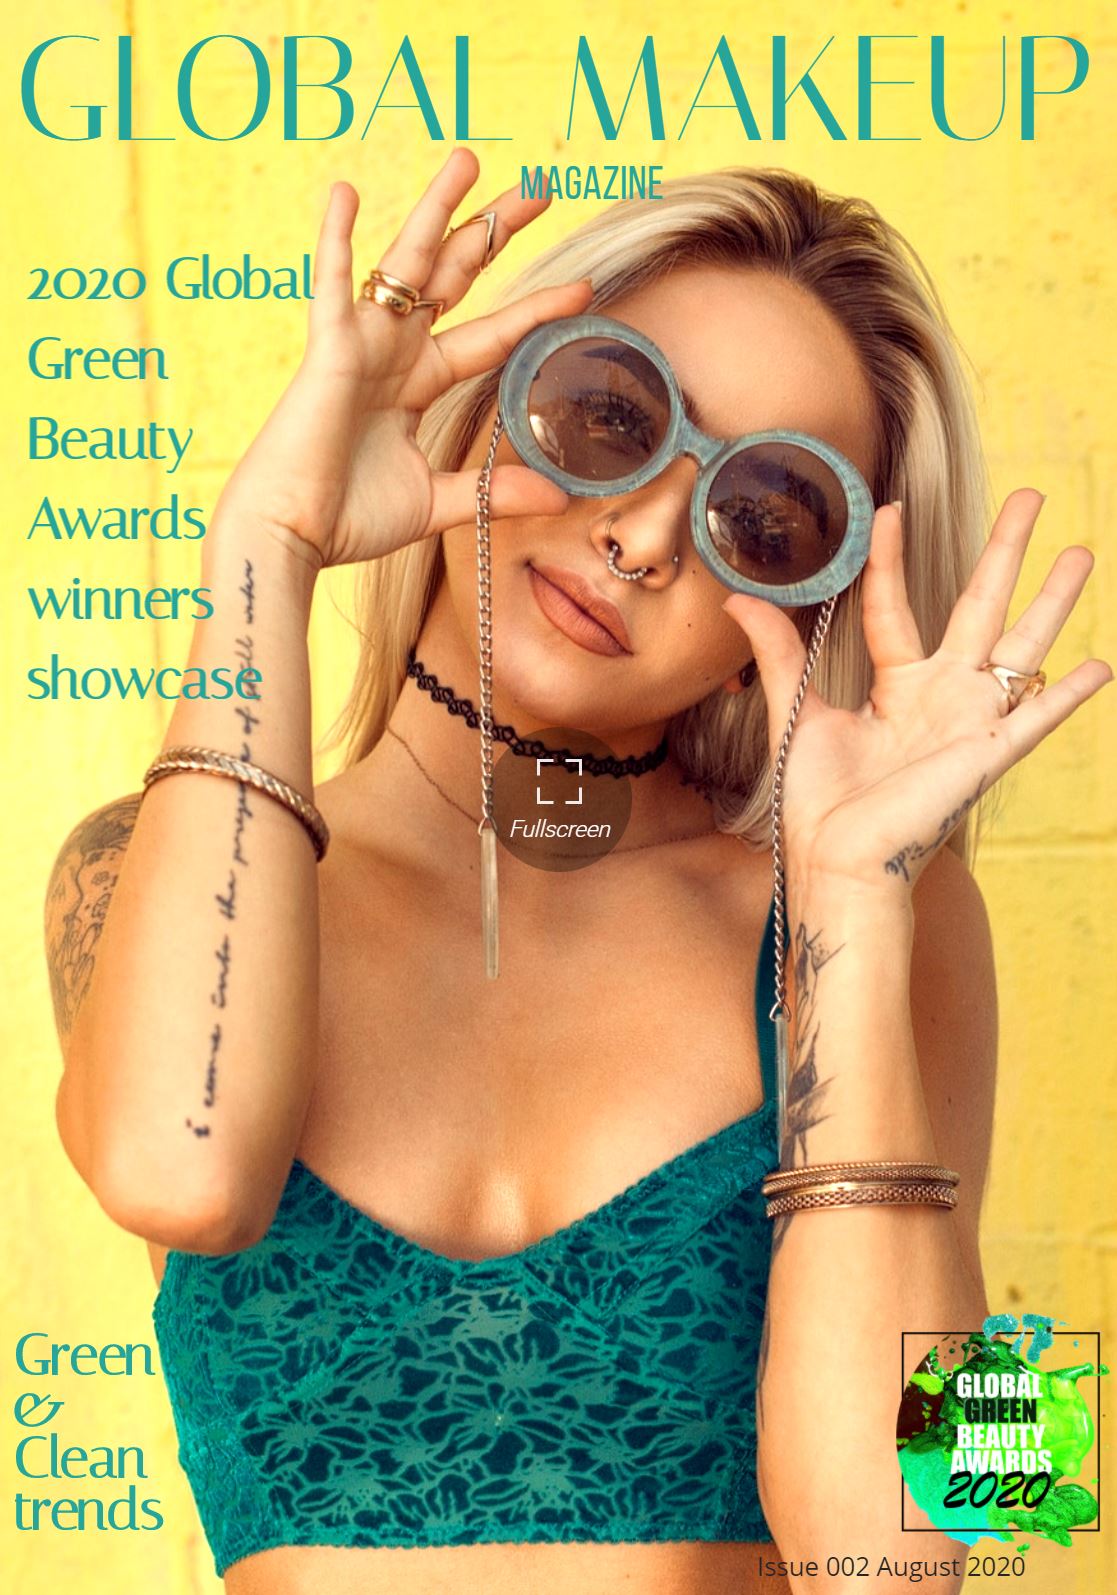 Dollbaby London Won a Forth Award at the 2020 Global Green Beauty Awards!